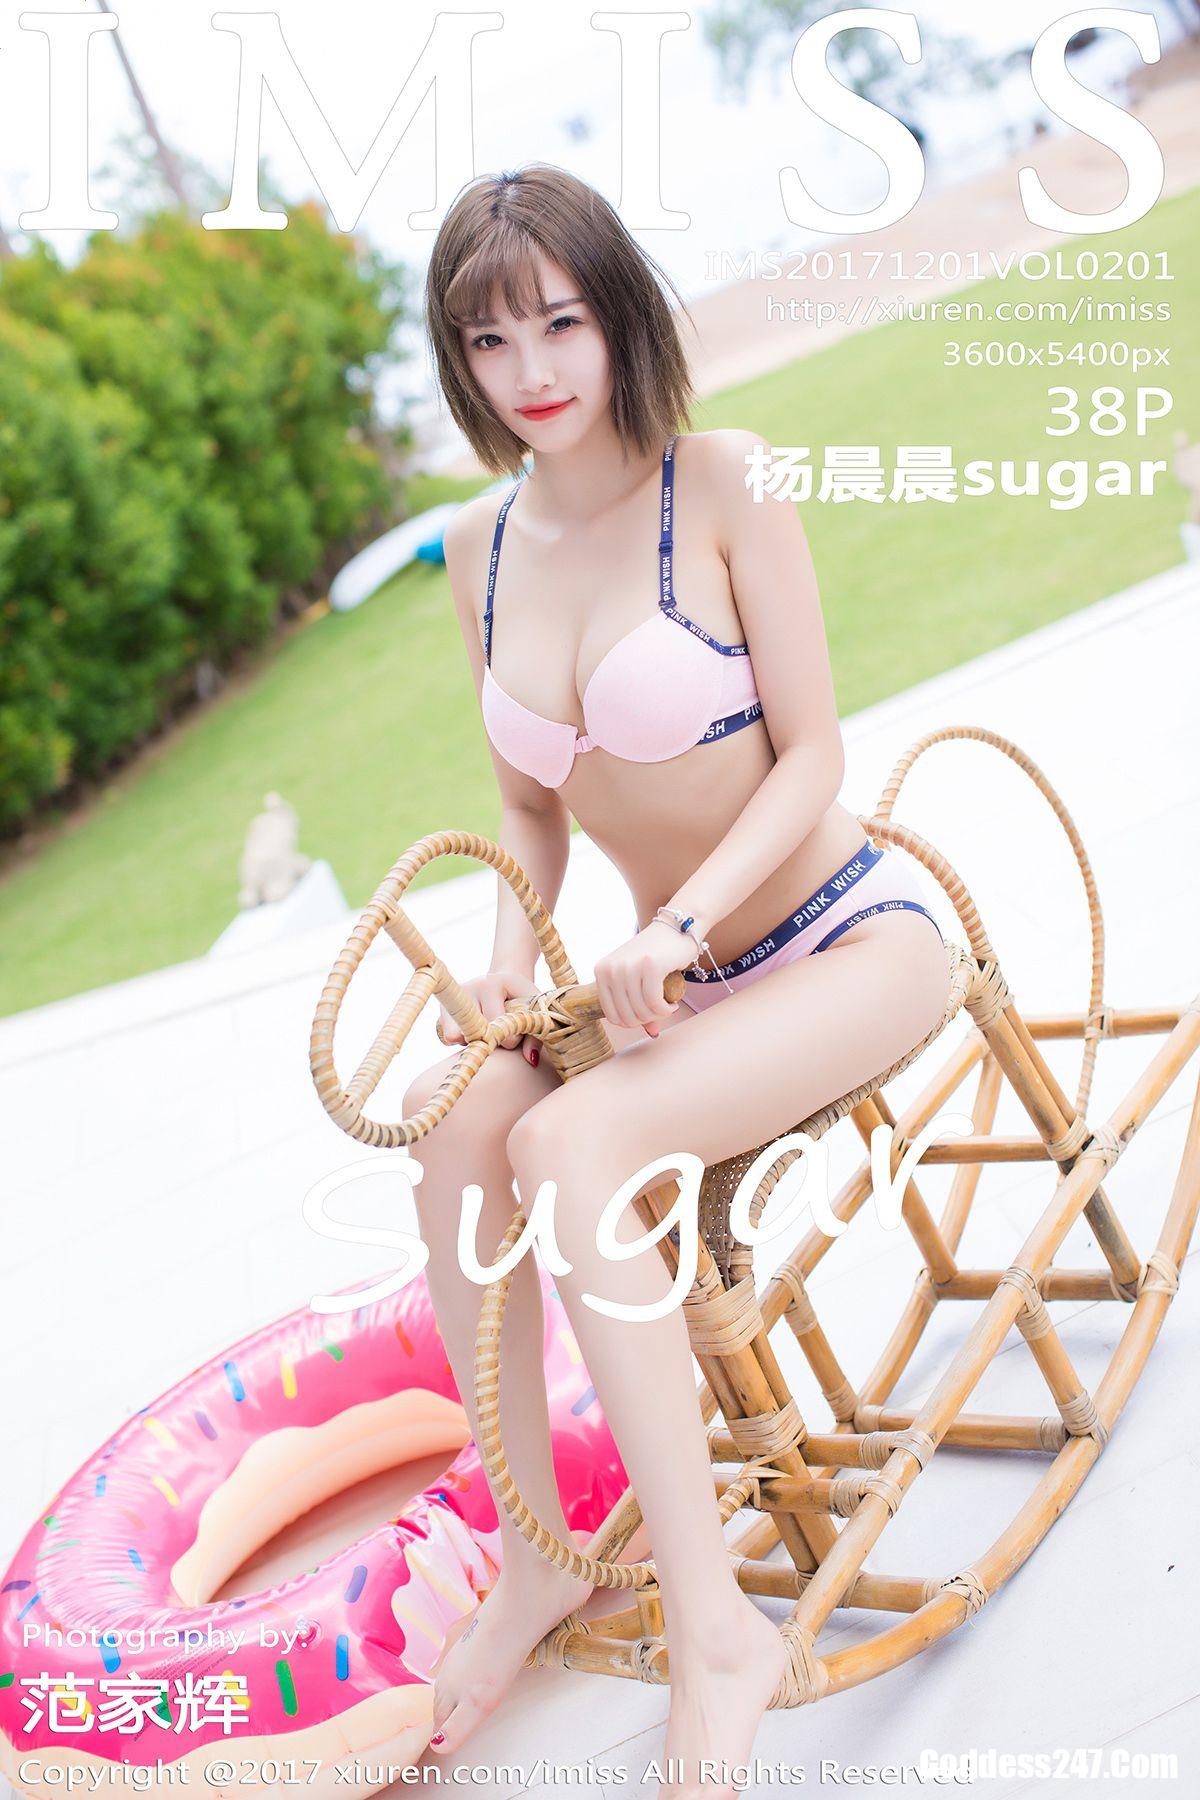 IMiss Vol.201 杨晨晨sugar 1